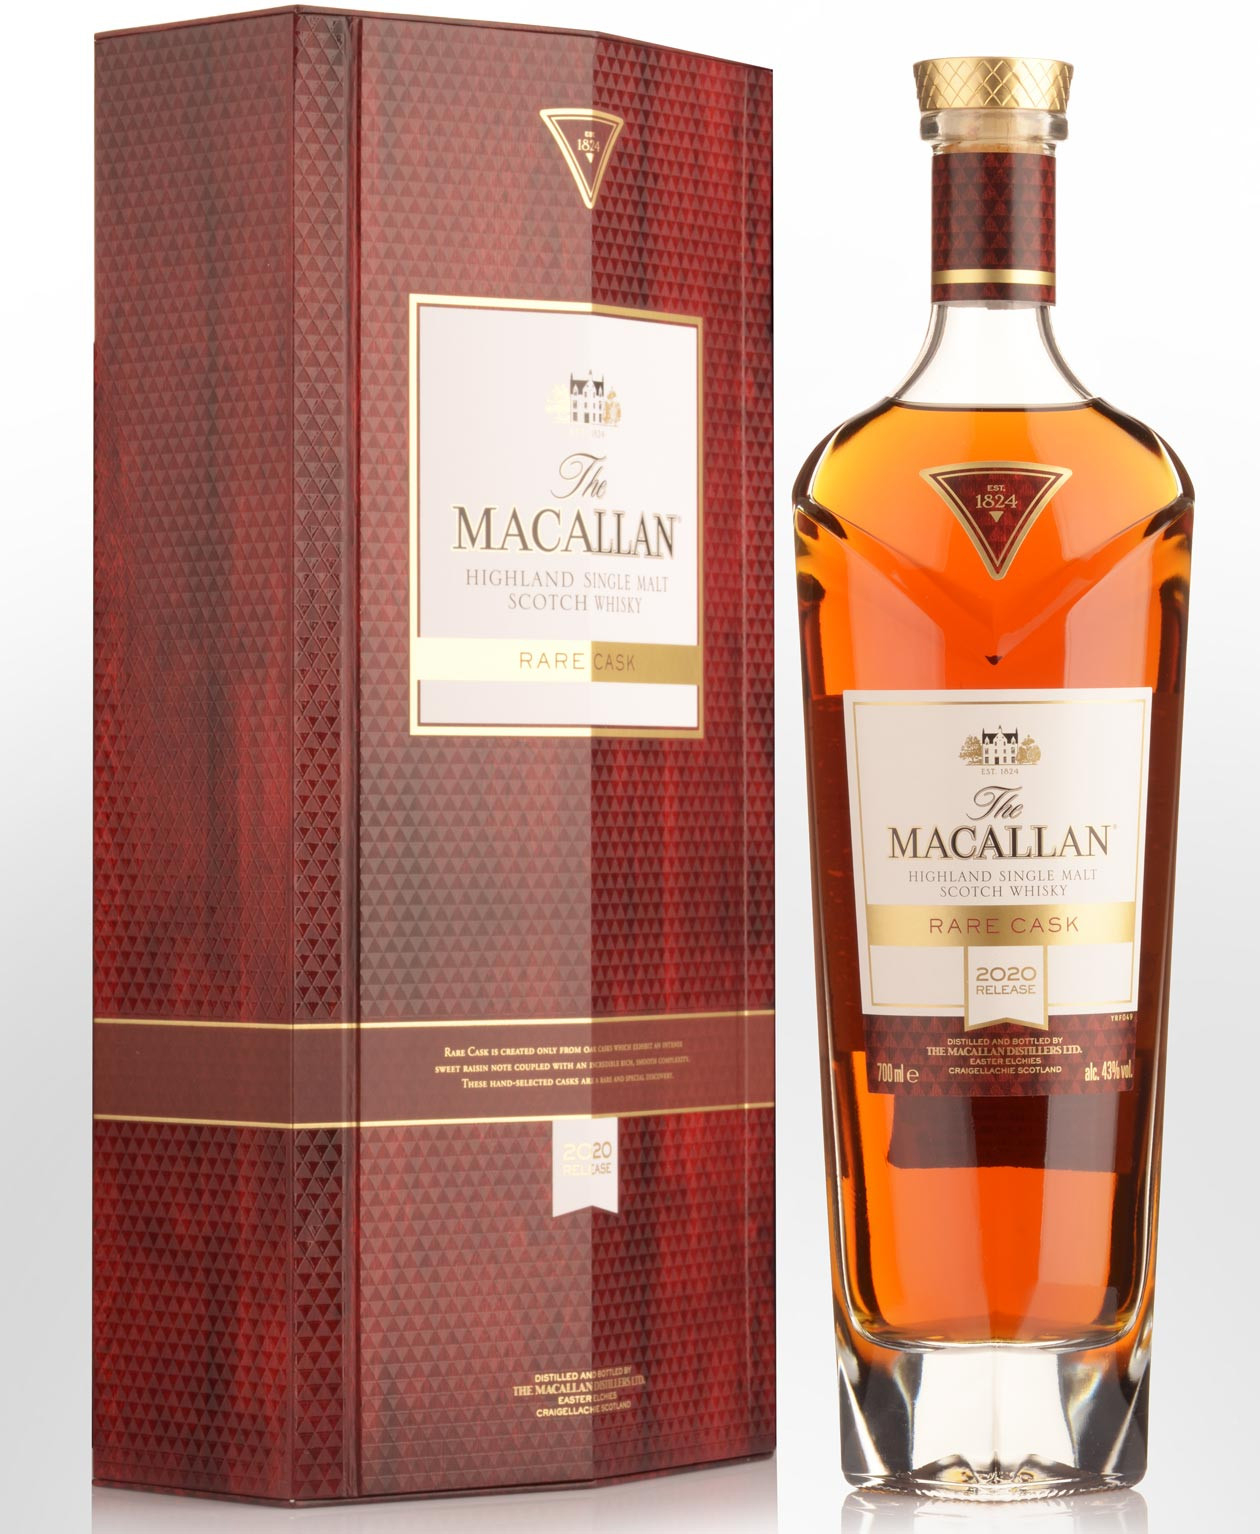 The Macallan Rare Cask Red Single Malt Scotch Whisky (700ml) 2020 release